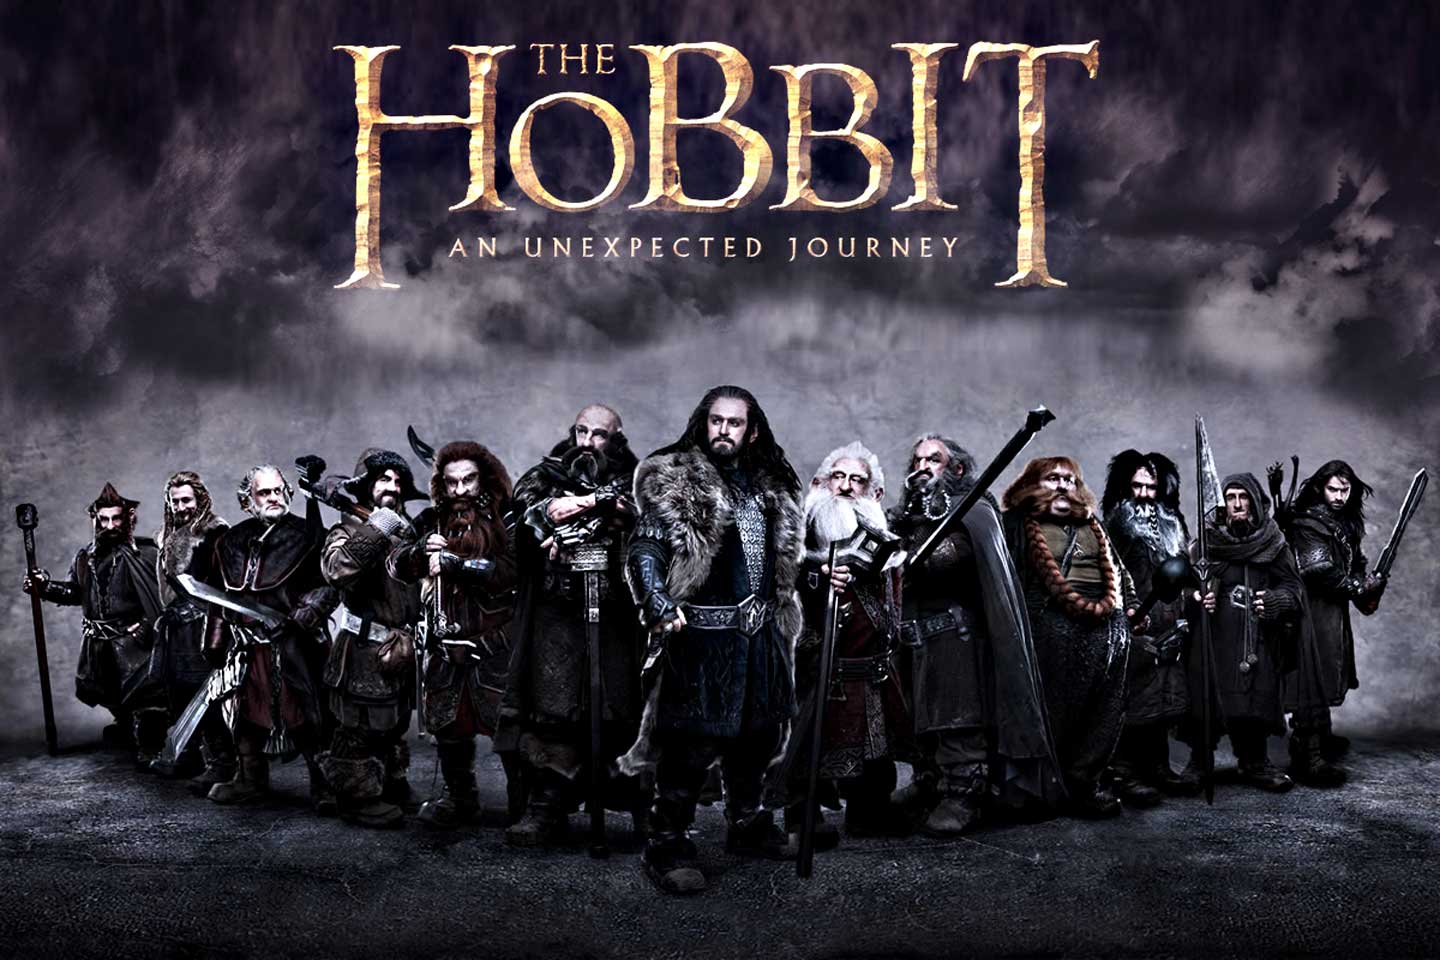 The hobbit pgtipsonfilms